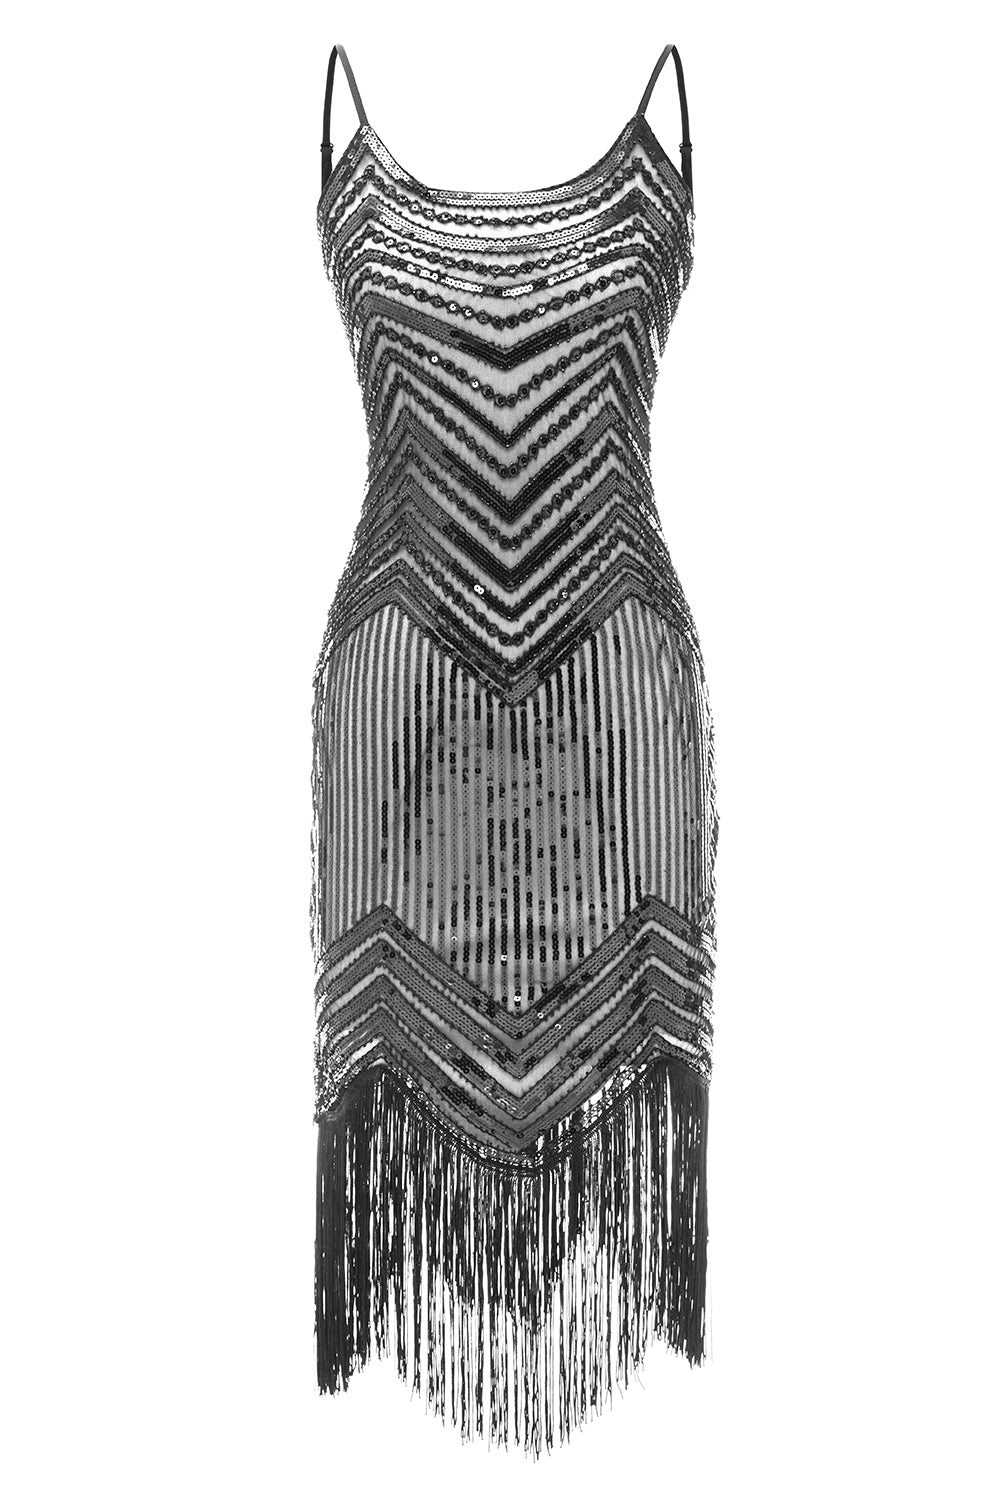 Black Red Spaghetti Straps 1920s Dress